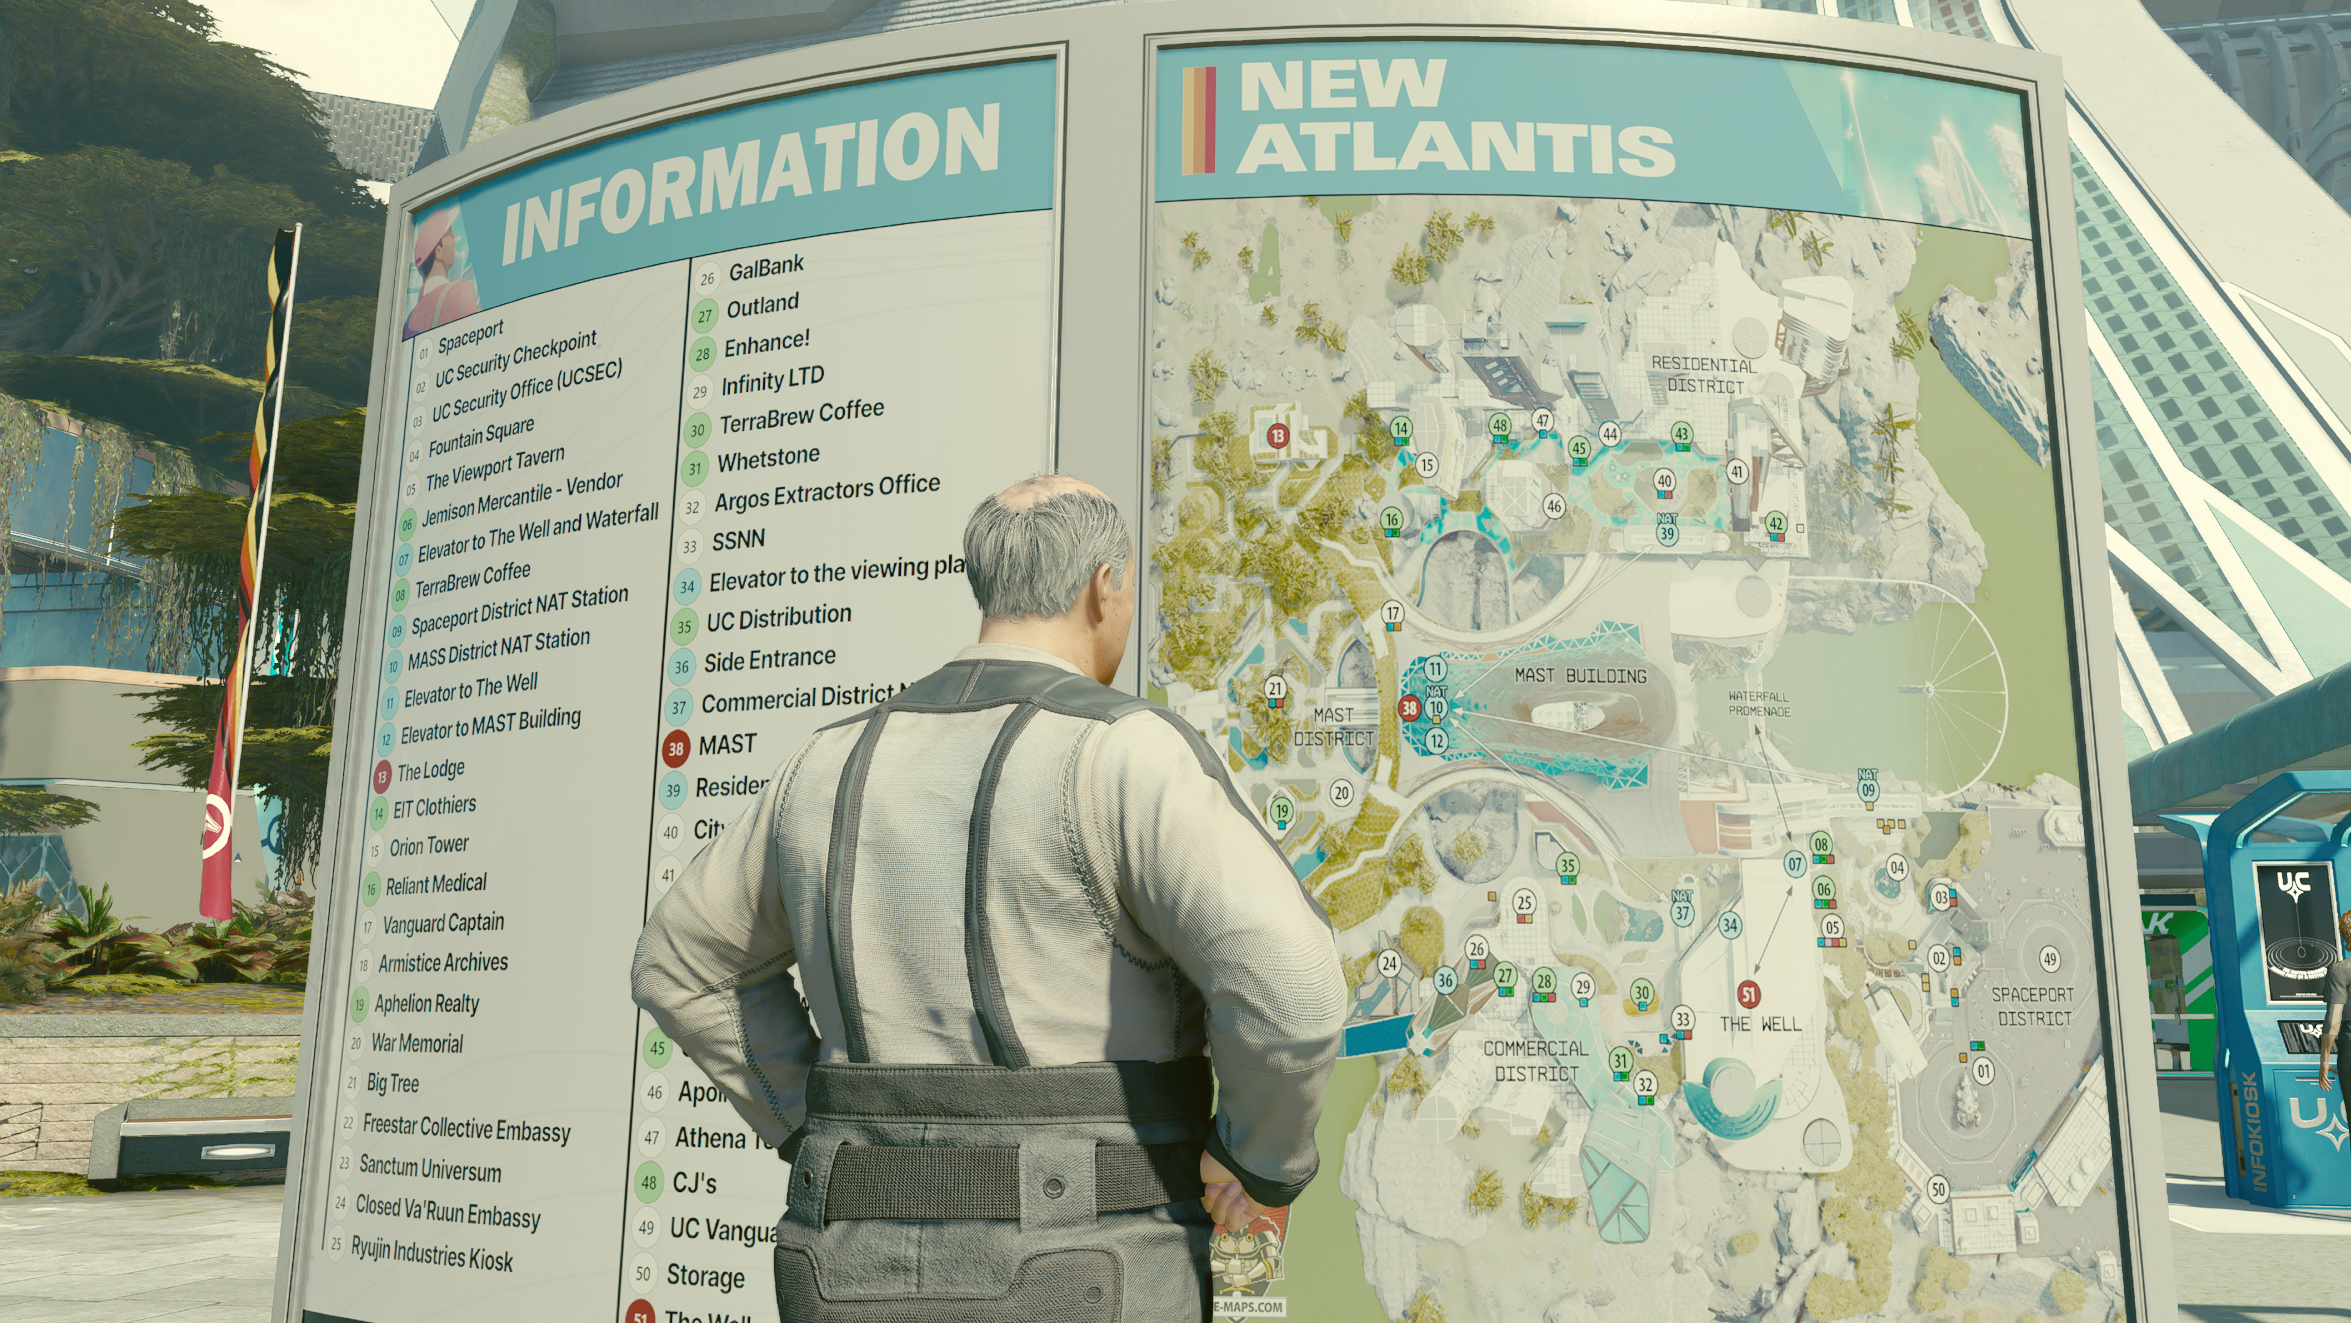  Starfield hero adds New Atlantis map to New Atlantis 